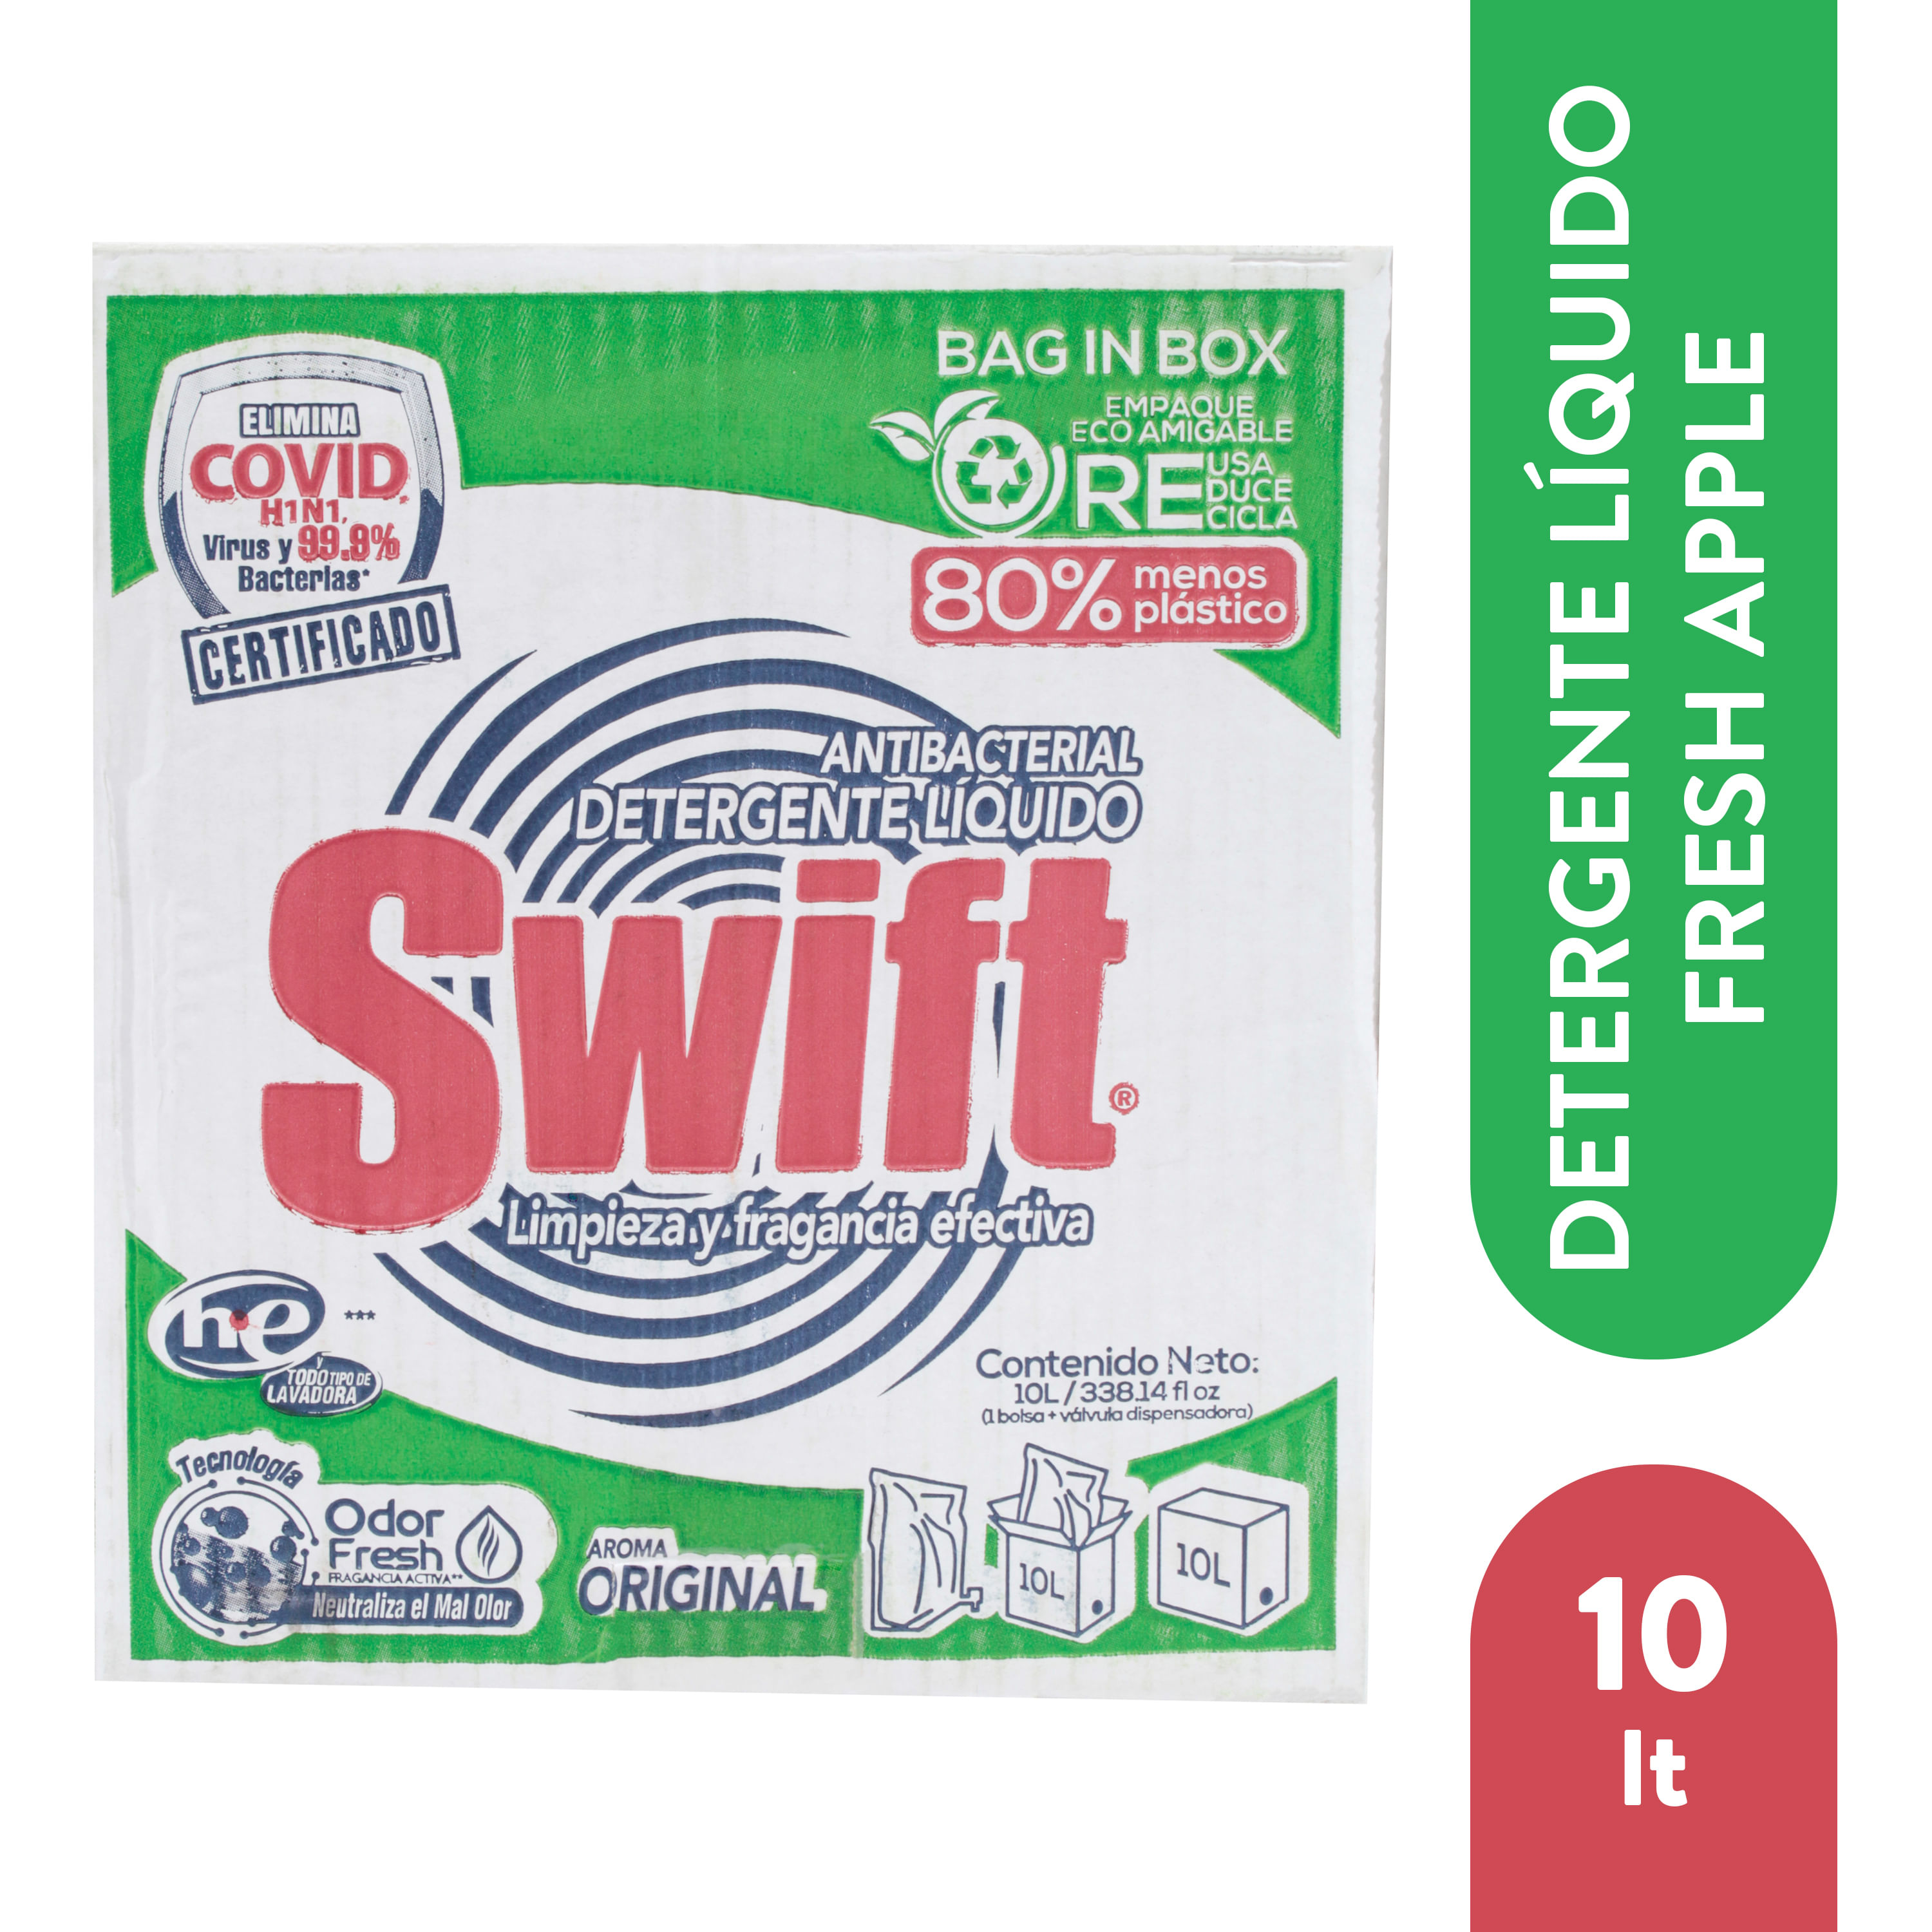 Comprar Detergente Liquido Swift Naranja -5000ml